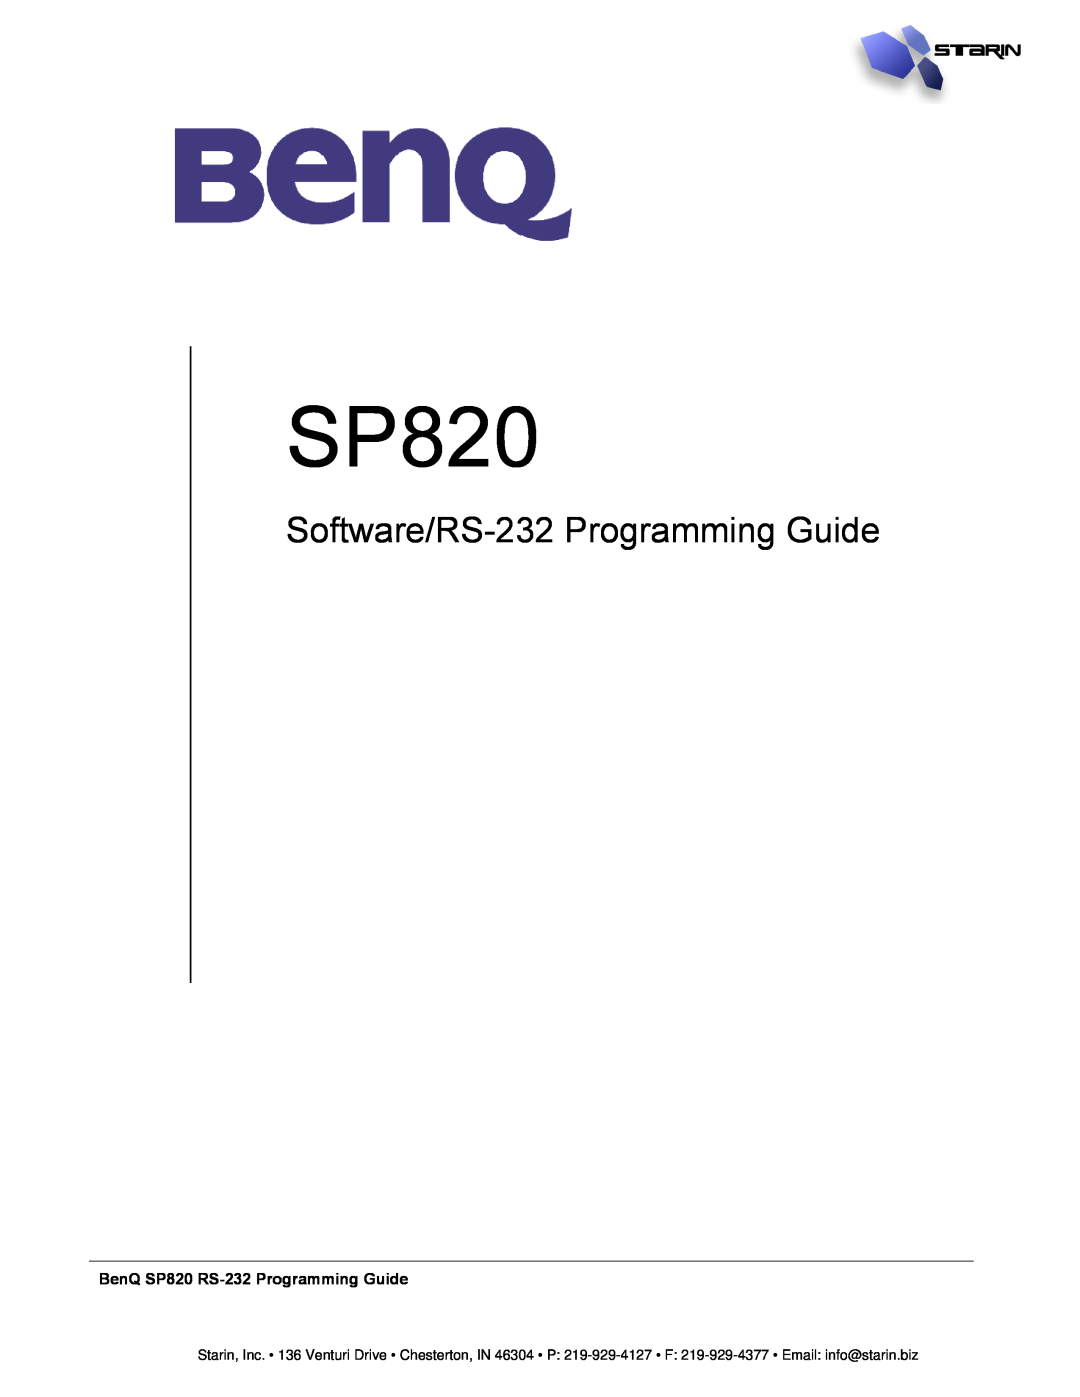 BenQ manual Software/RS-232 Programming Guide, BenQ SP820 RS-232 Programming Guide 